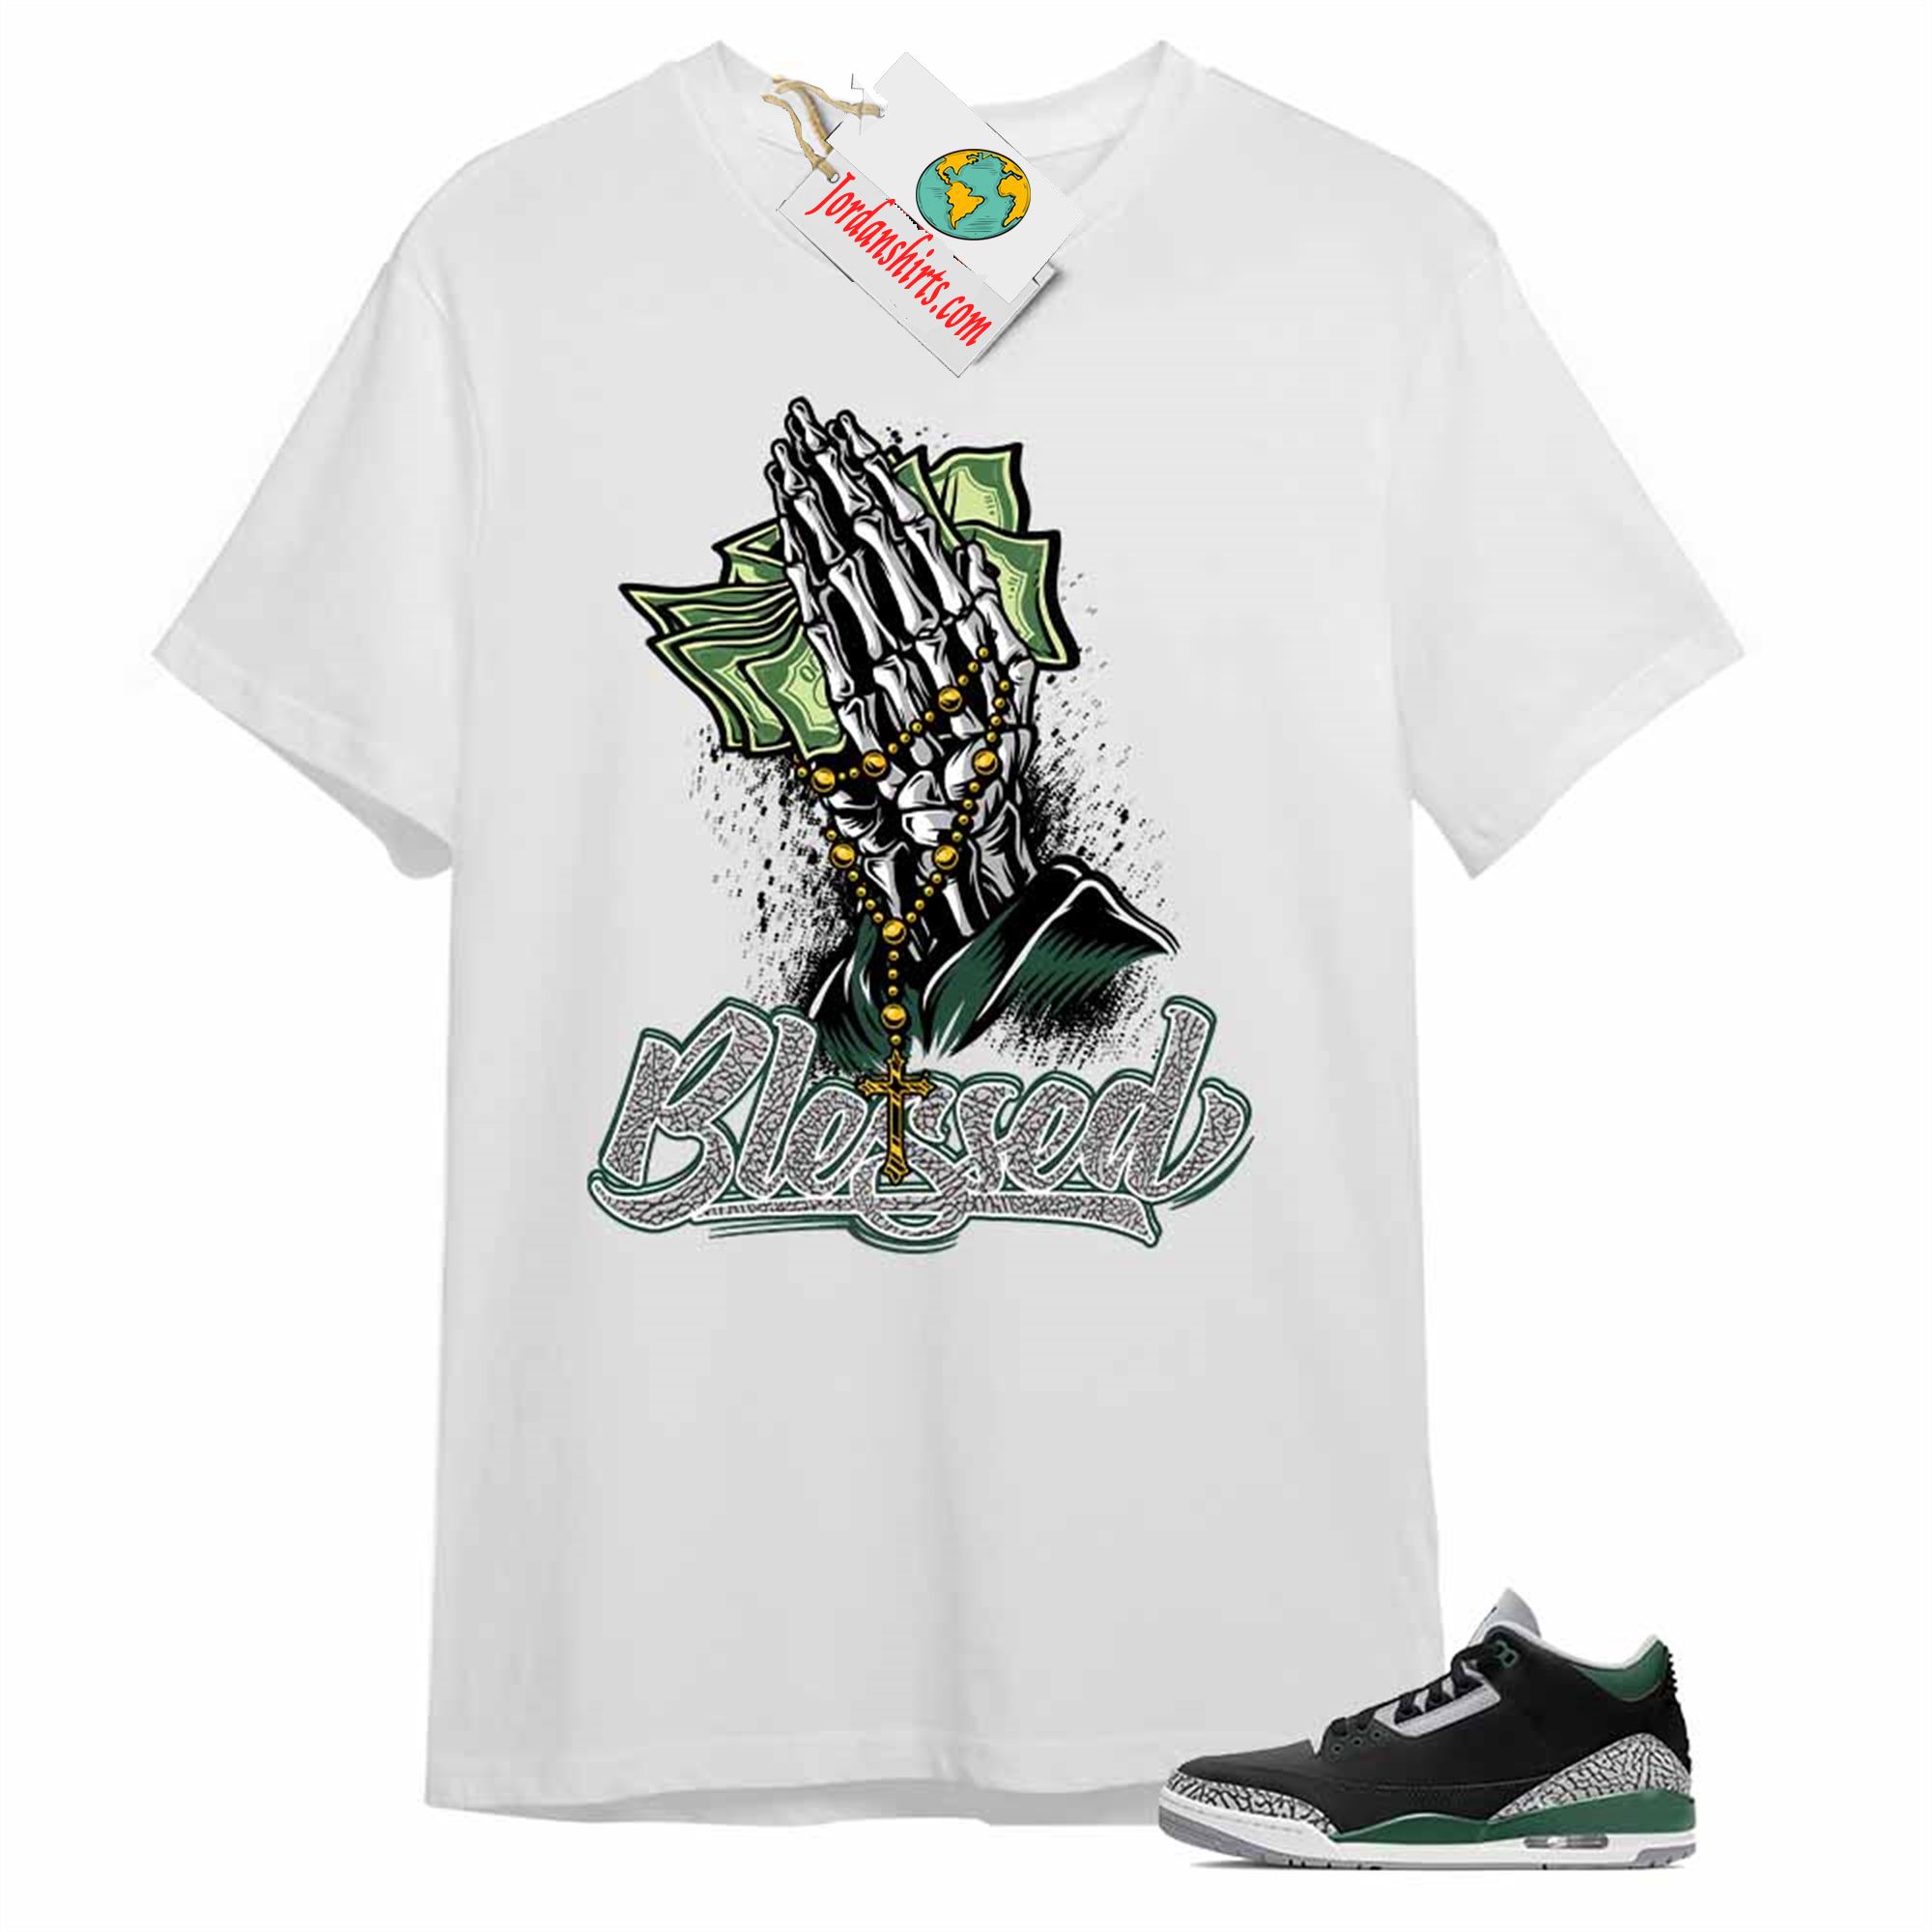 Jordan 3 Shirt, Blessed Pray Hand Money White Air Jordan 3 Pine Green 3s Full Size Up To 5xl